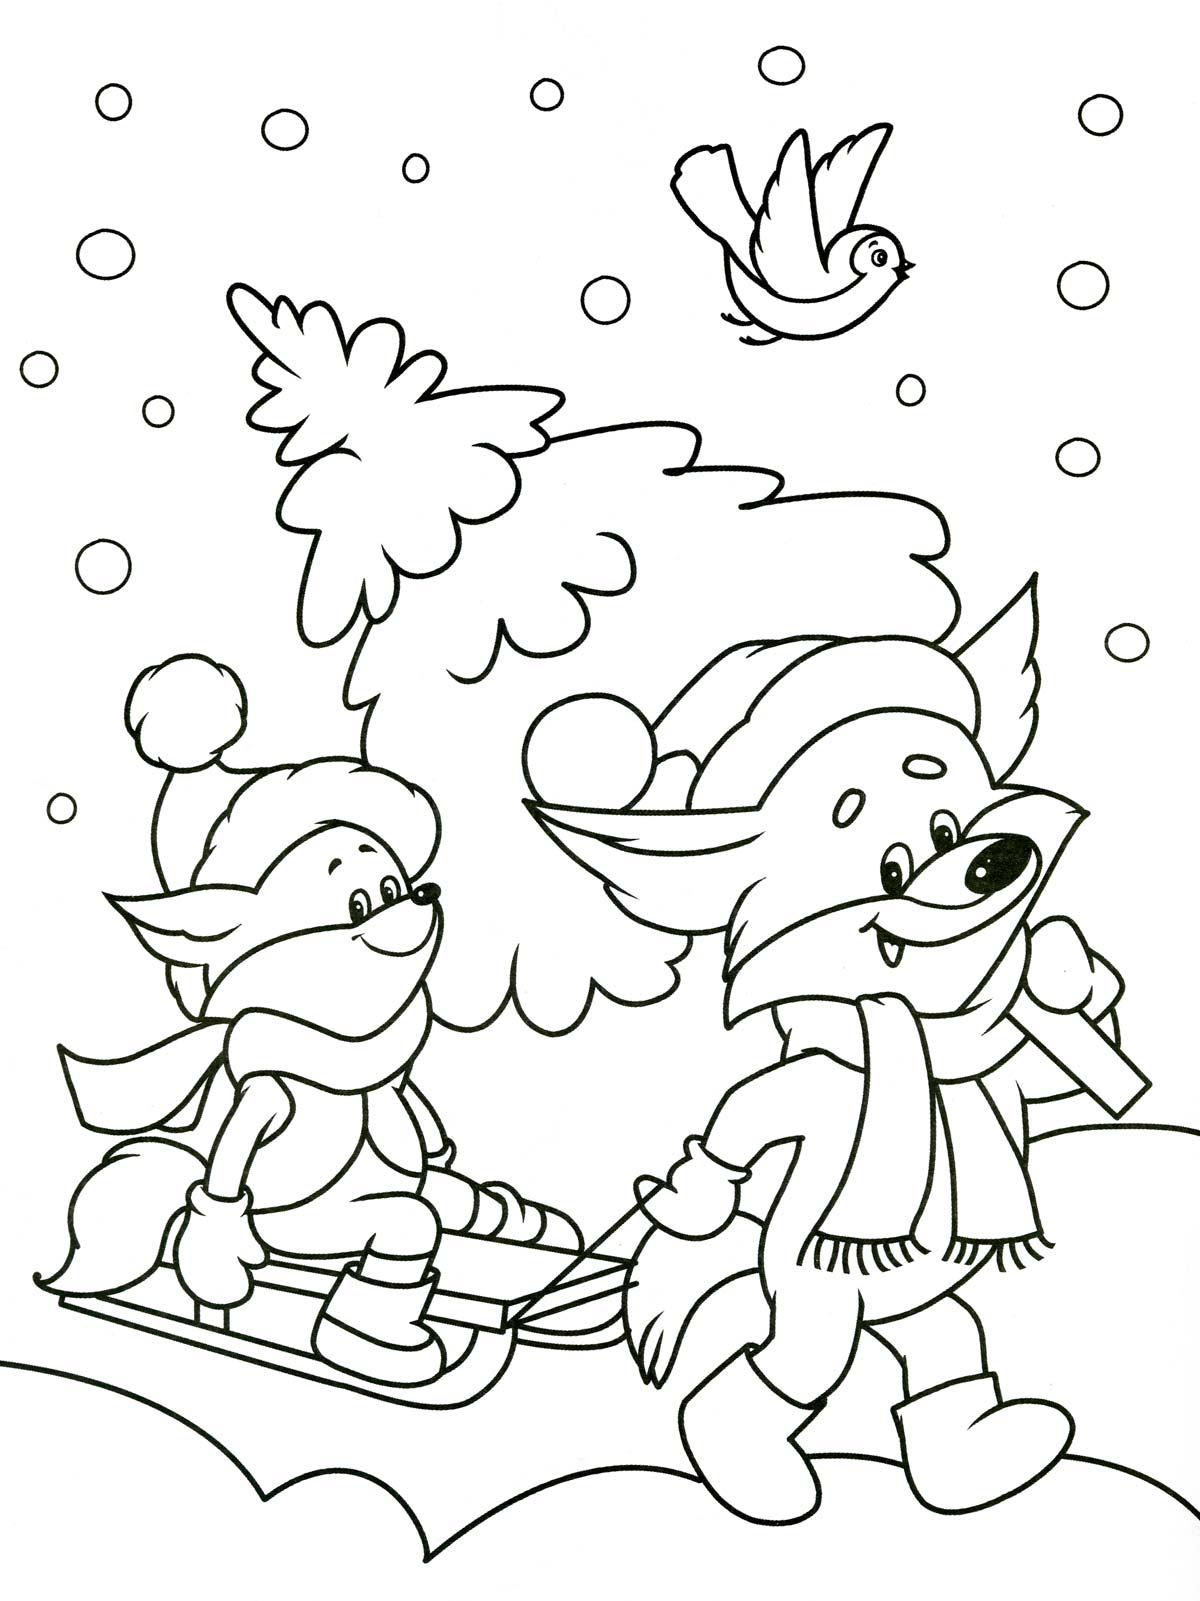 Раскраски на тему зима - животные